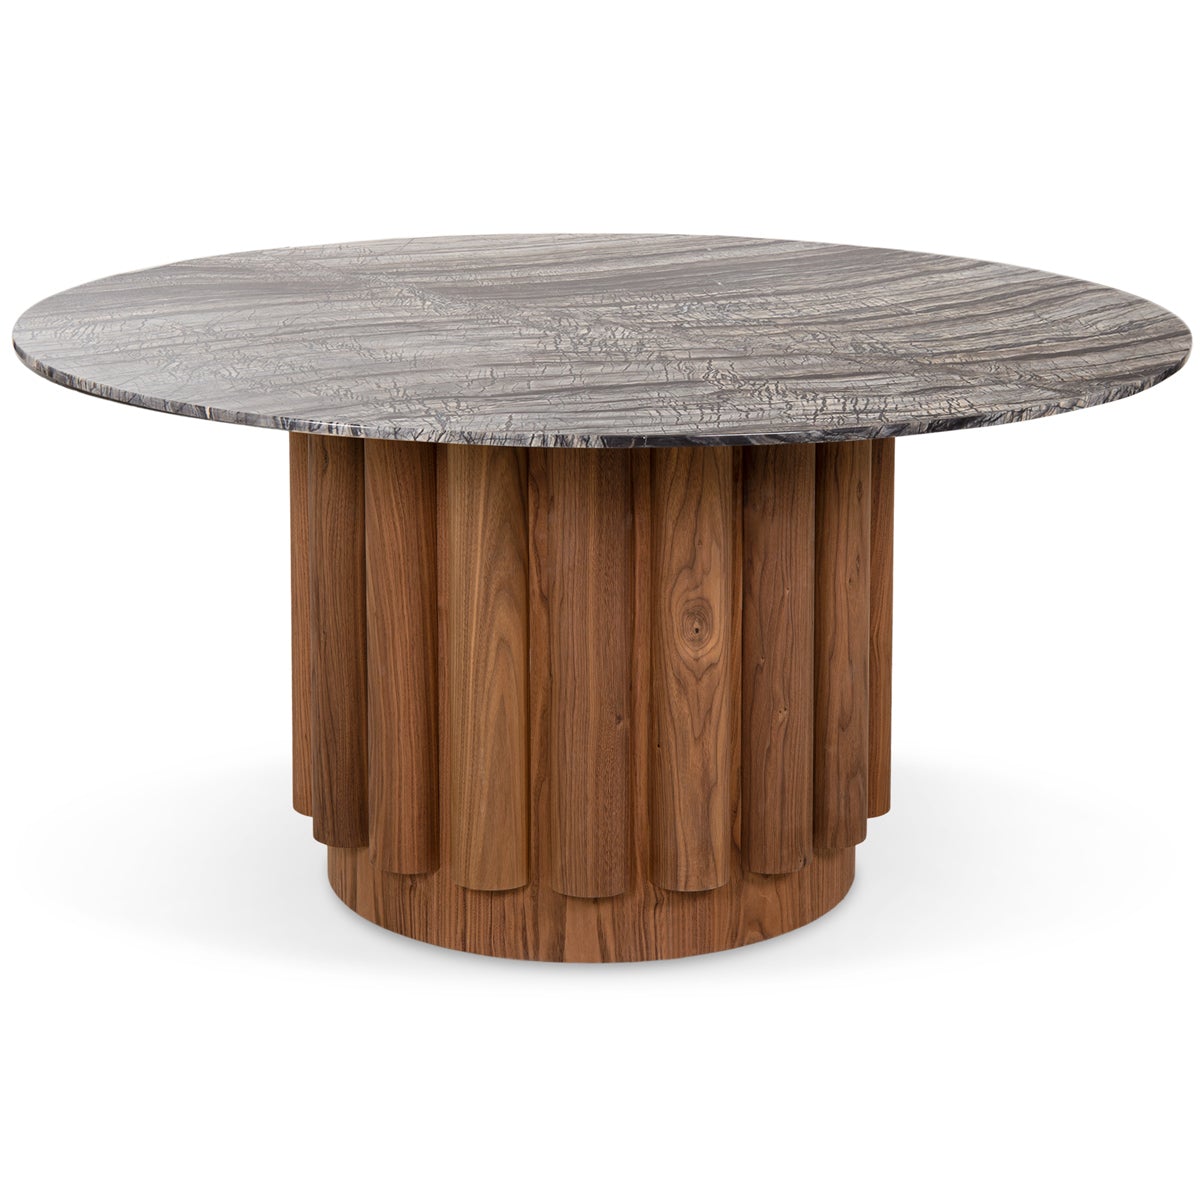 Eden Rock Dining Table in Walnut - ModShop1.com